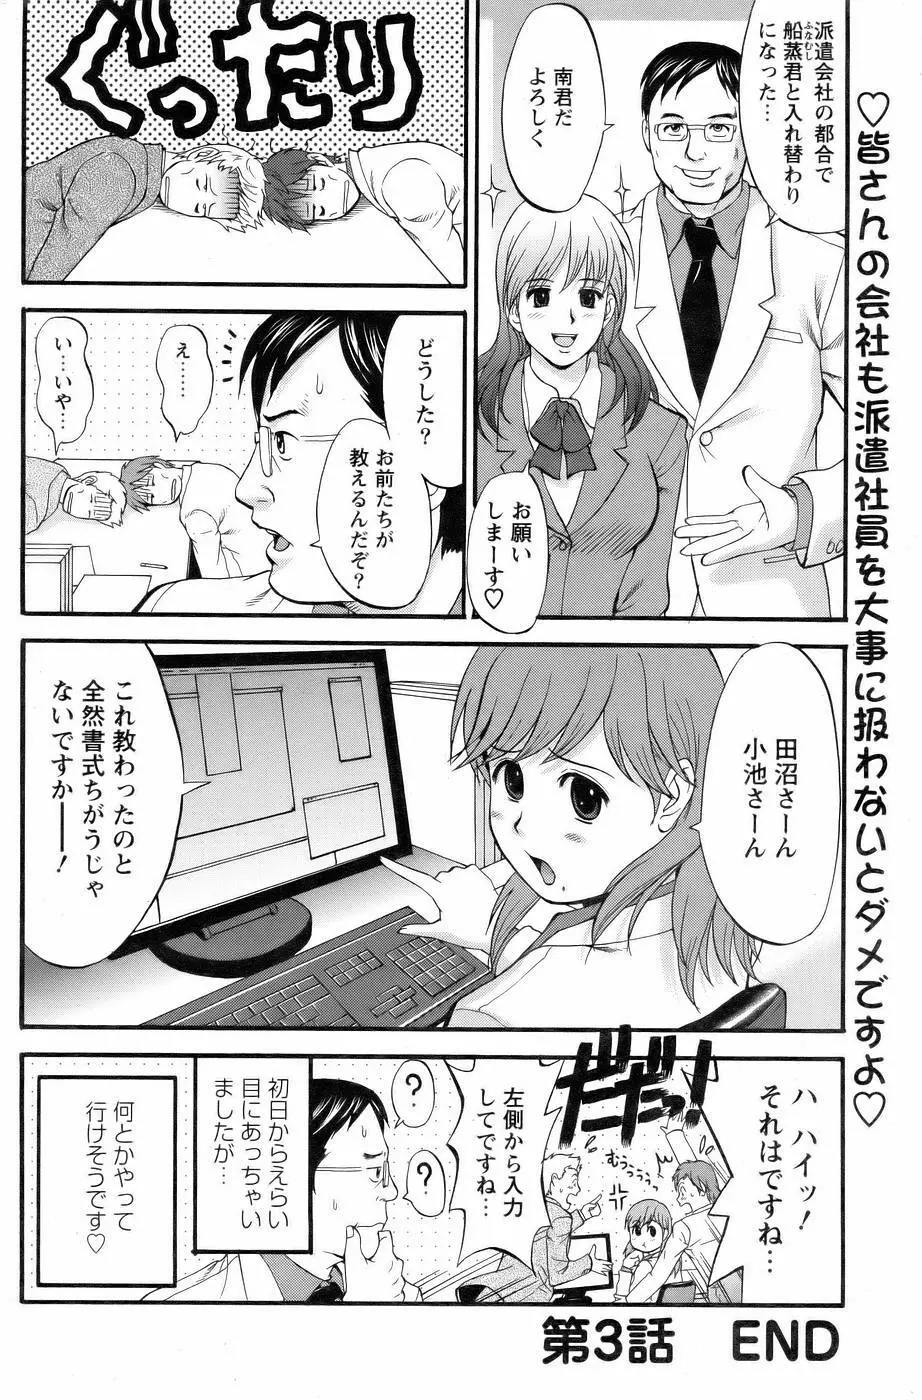 Haken no Muuko San 3 21ページ